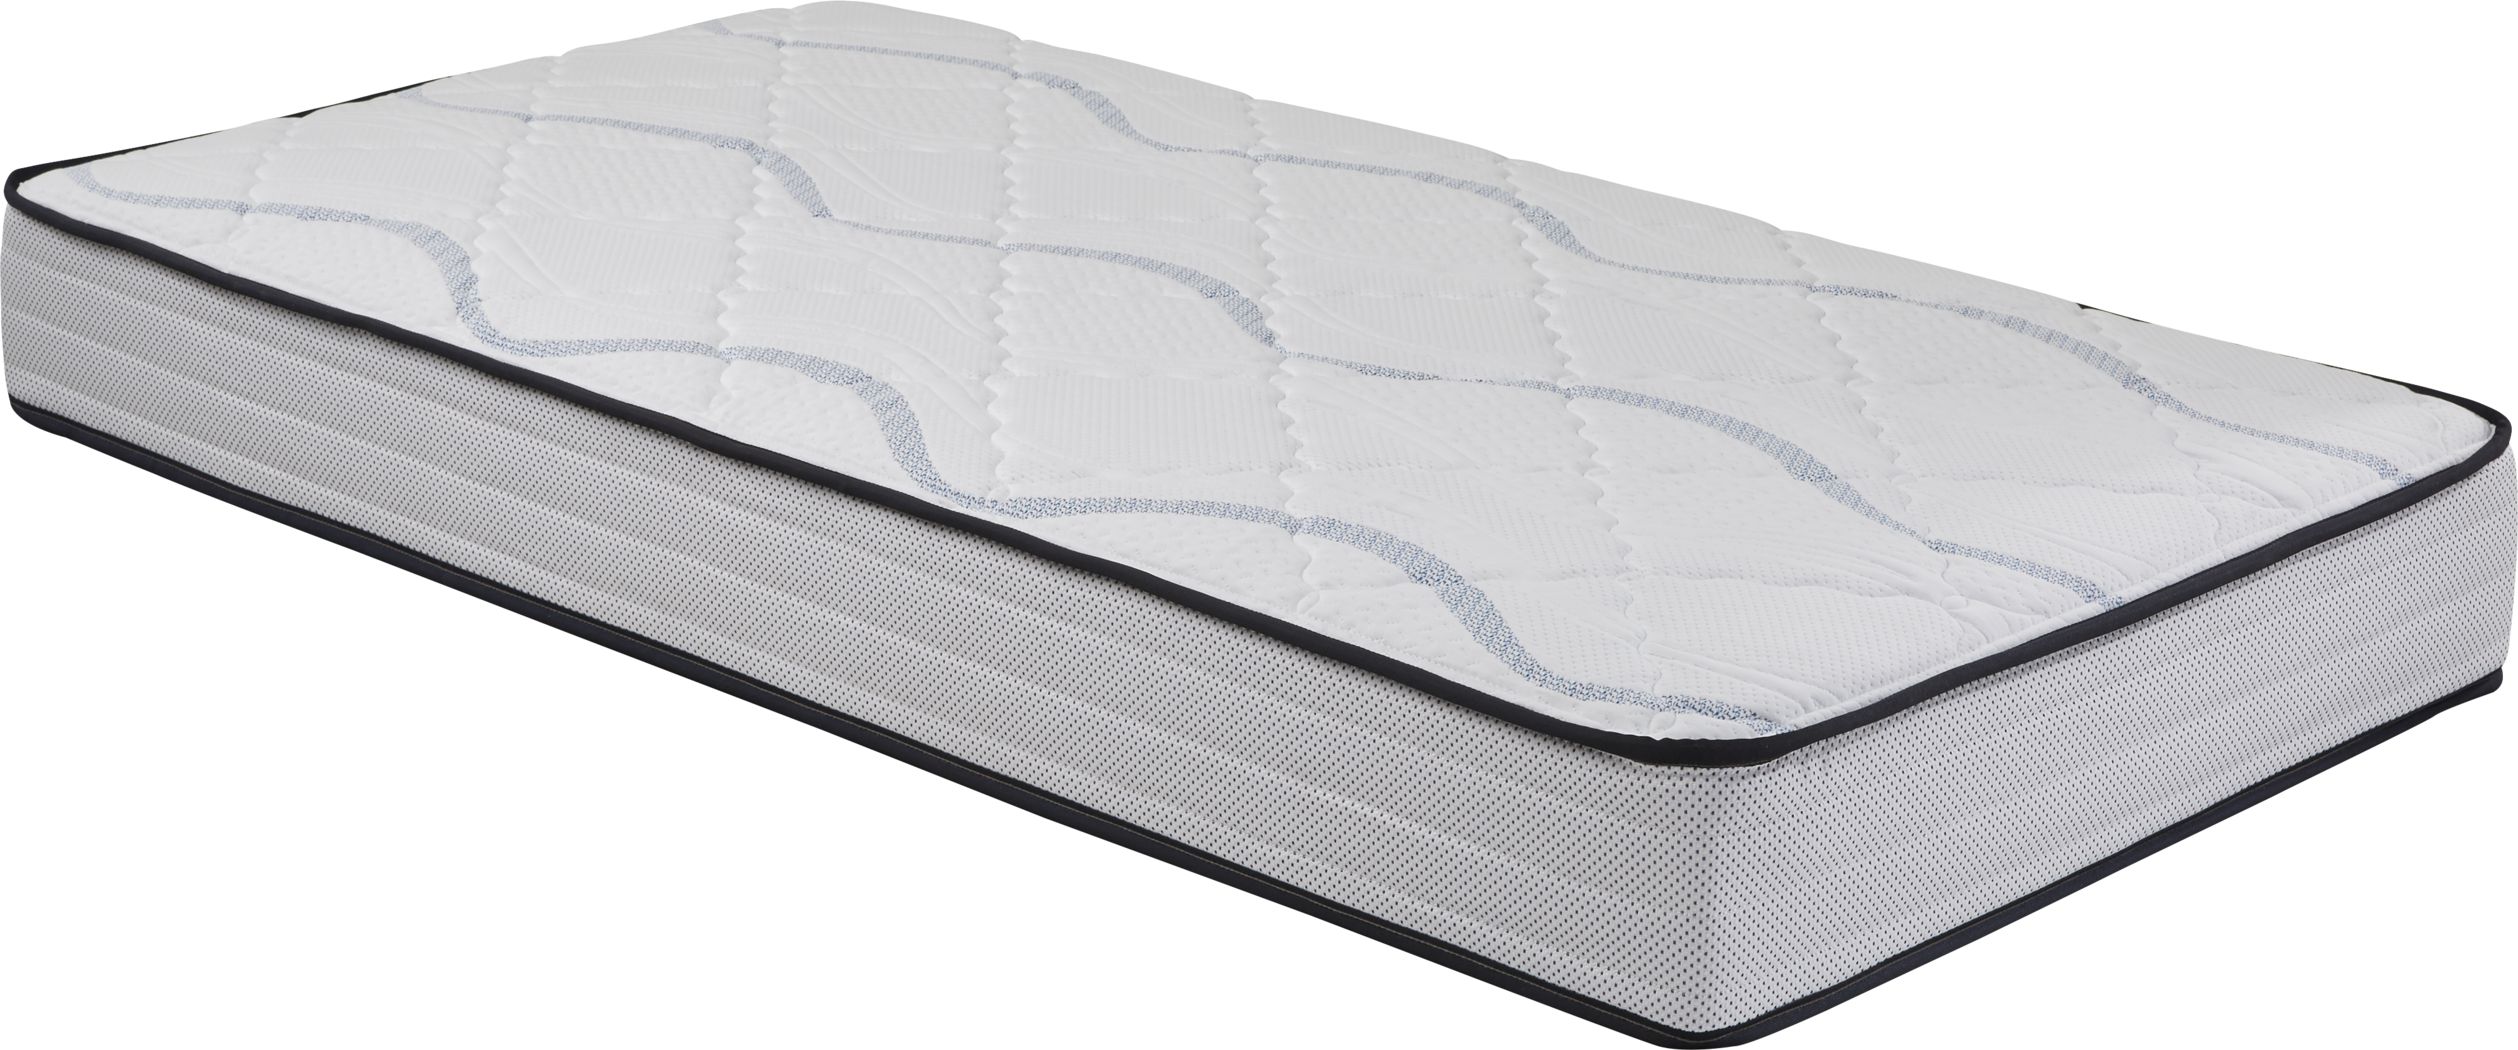 overstock foam mattress twin